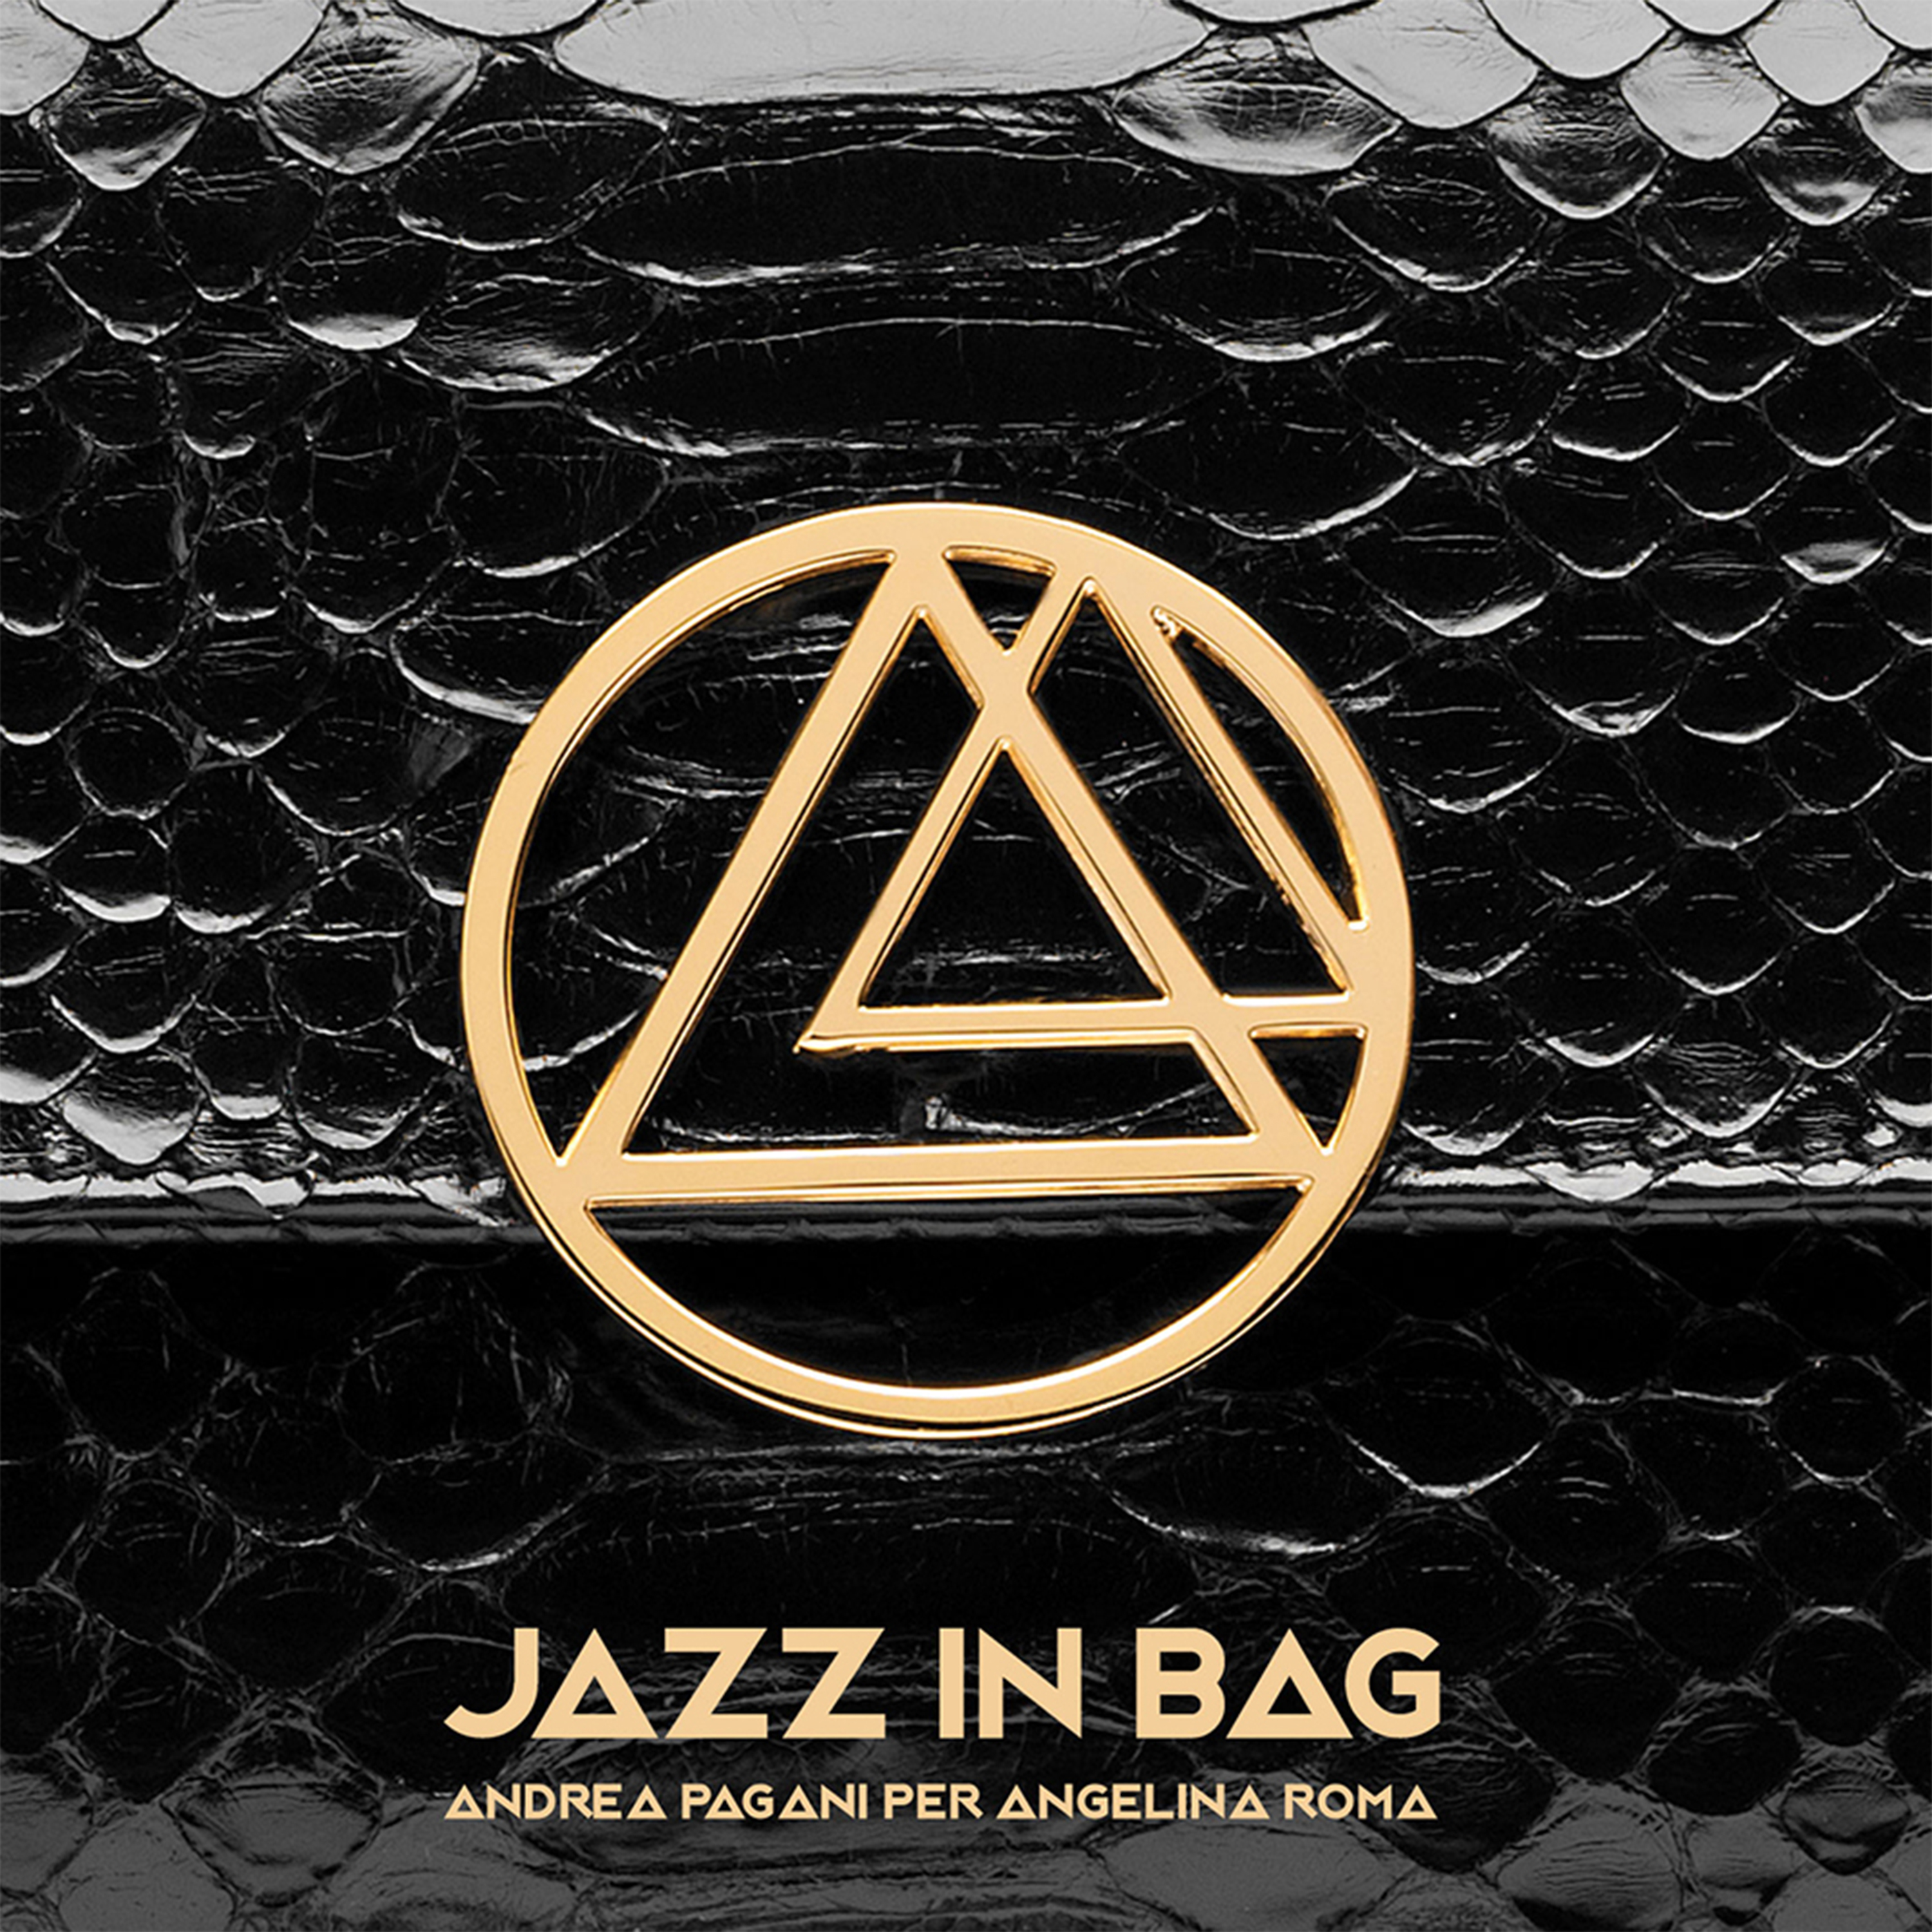 Jazz in bag – Andrea Pagani per AngelinARoma